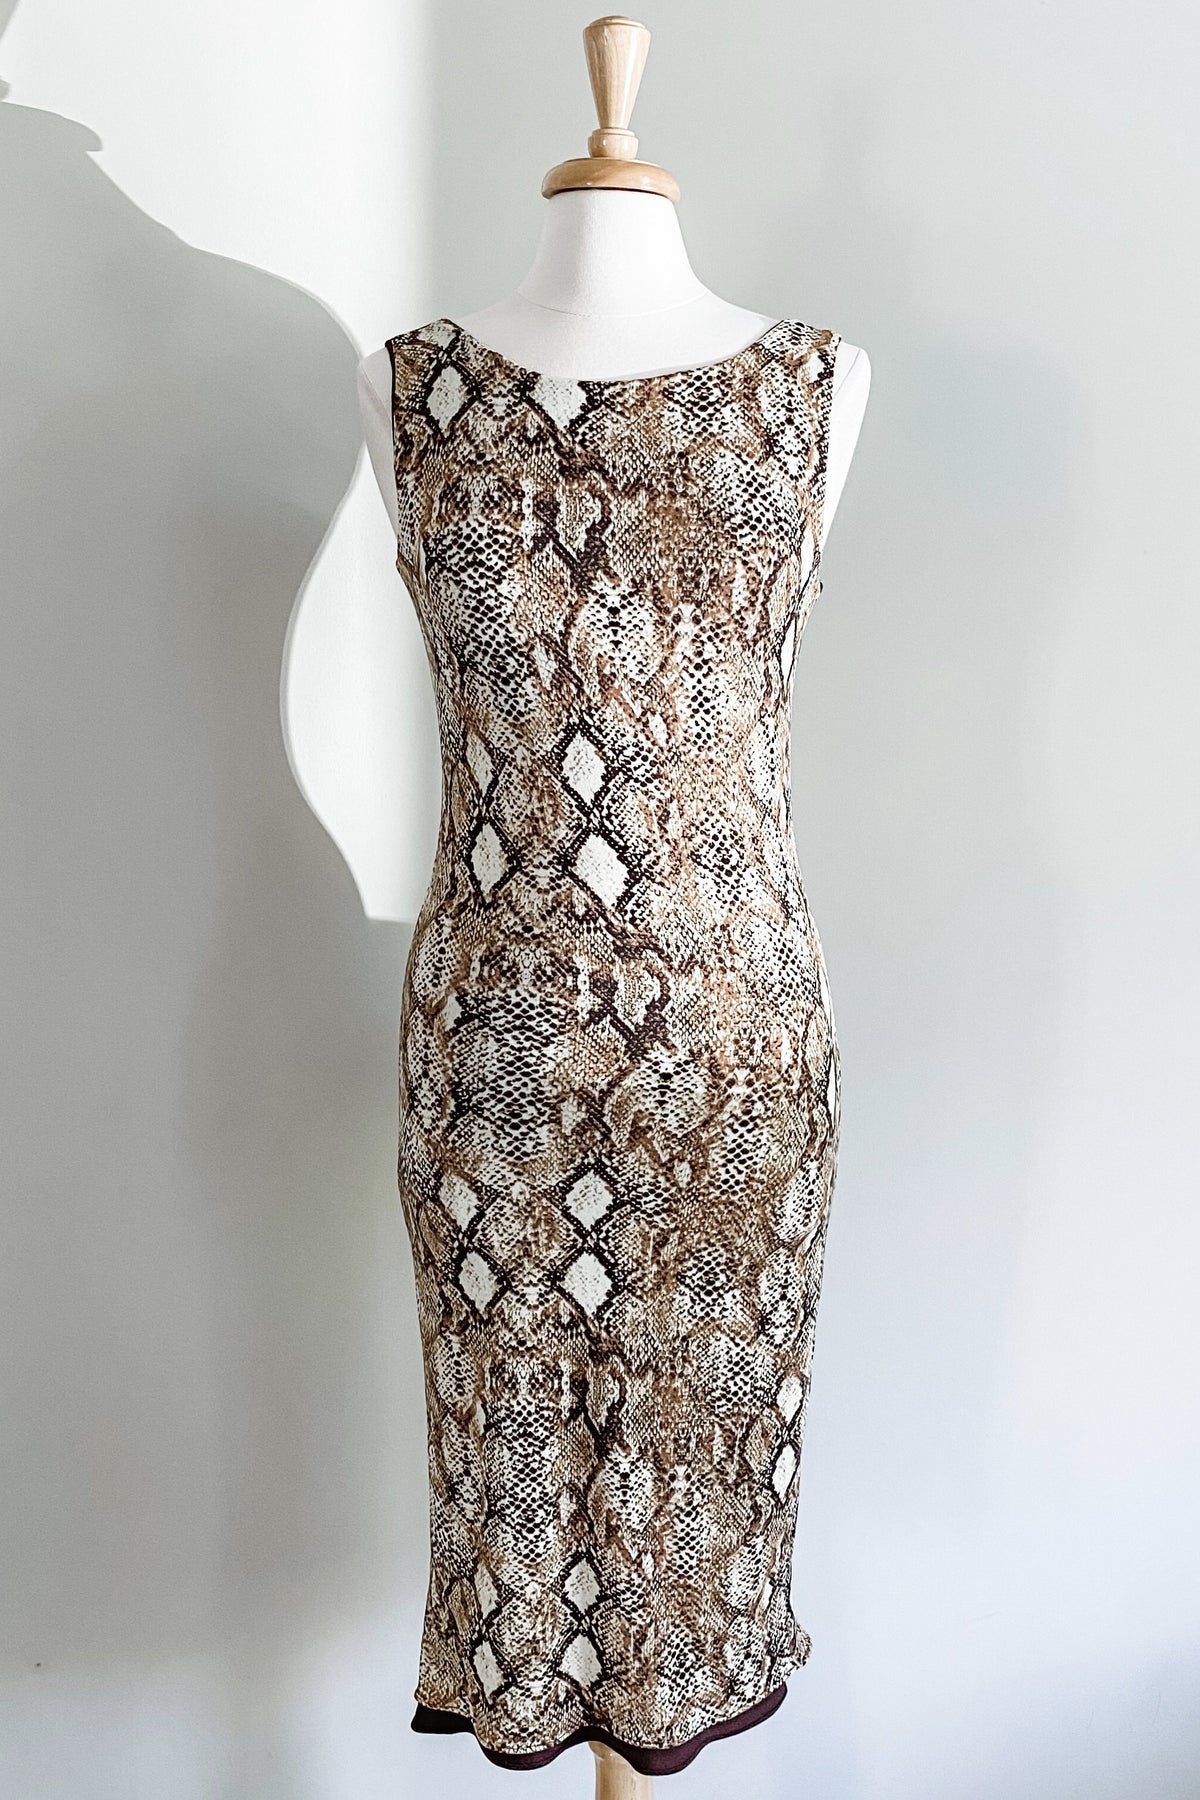 Sheath Dress in Brown Snake Print